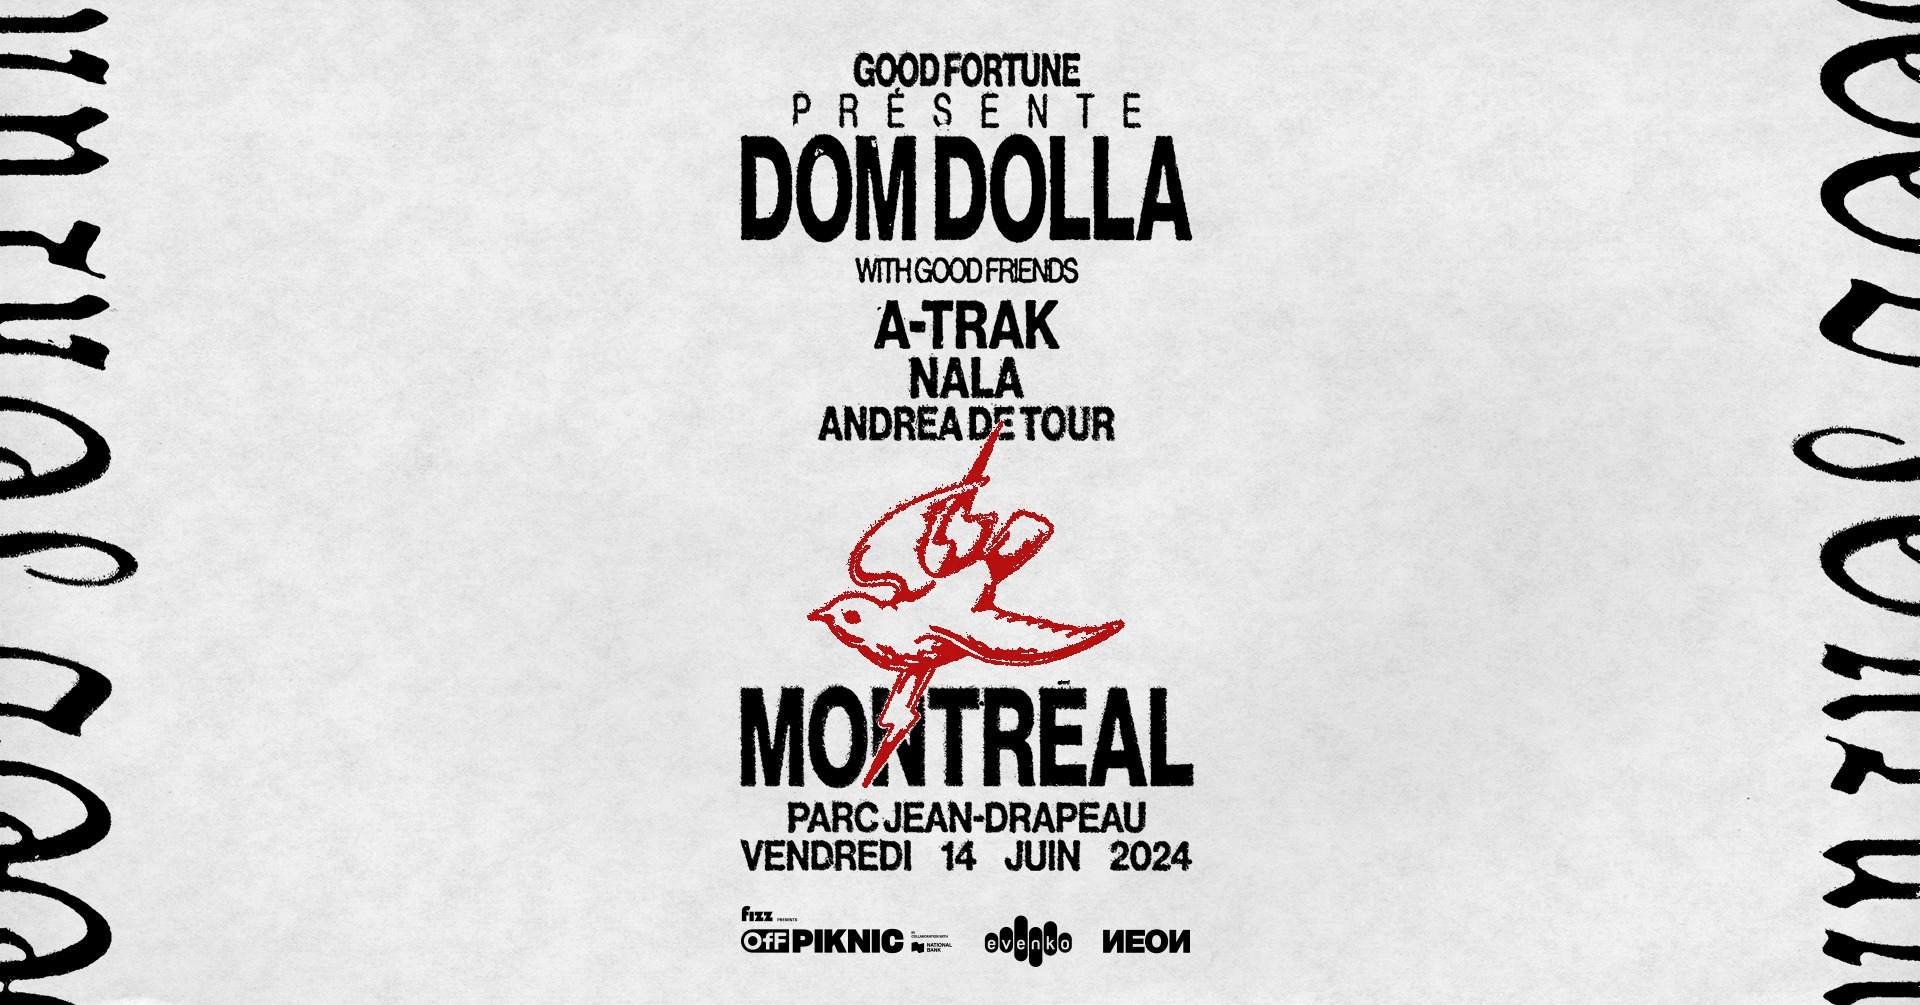 GOOD FORTUNE presents Dom Dolla & good friends at Parc Jean-Drapeau - フライヤー表